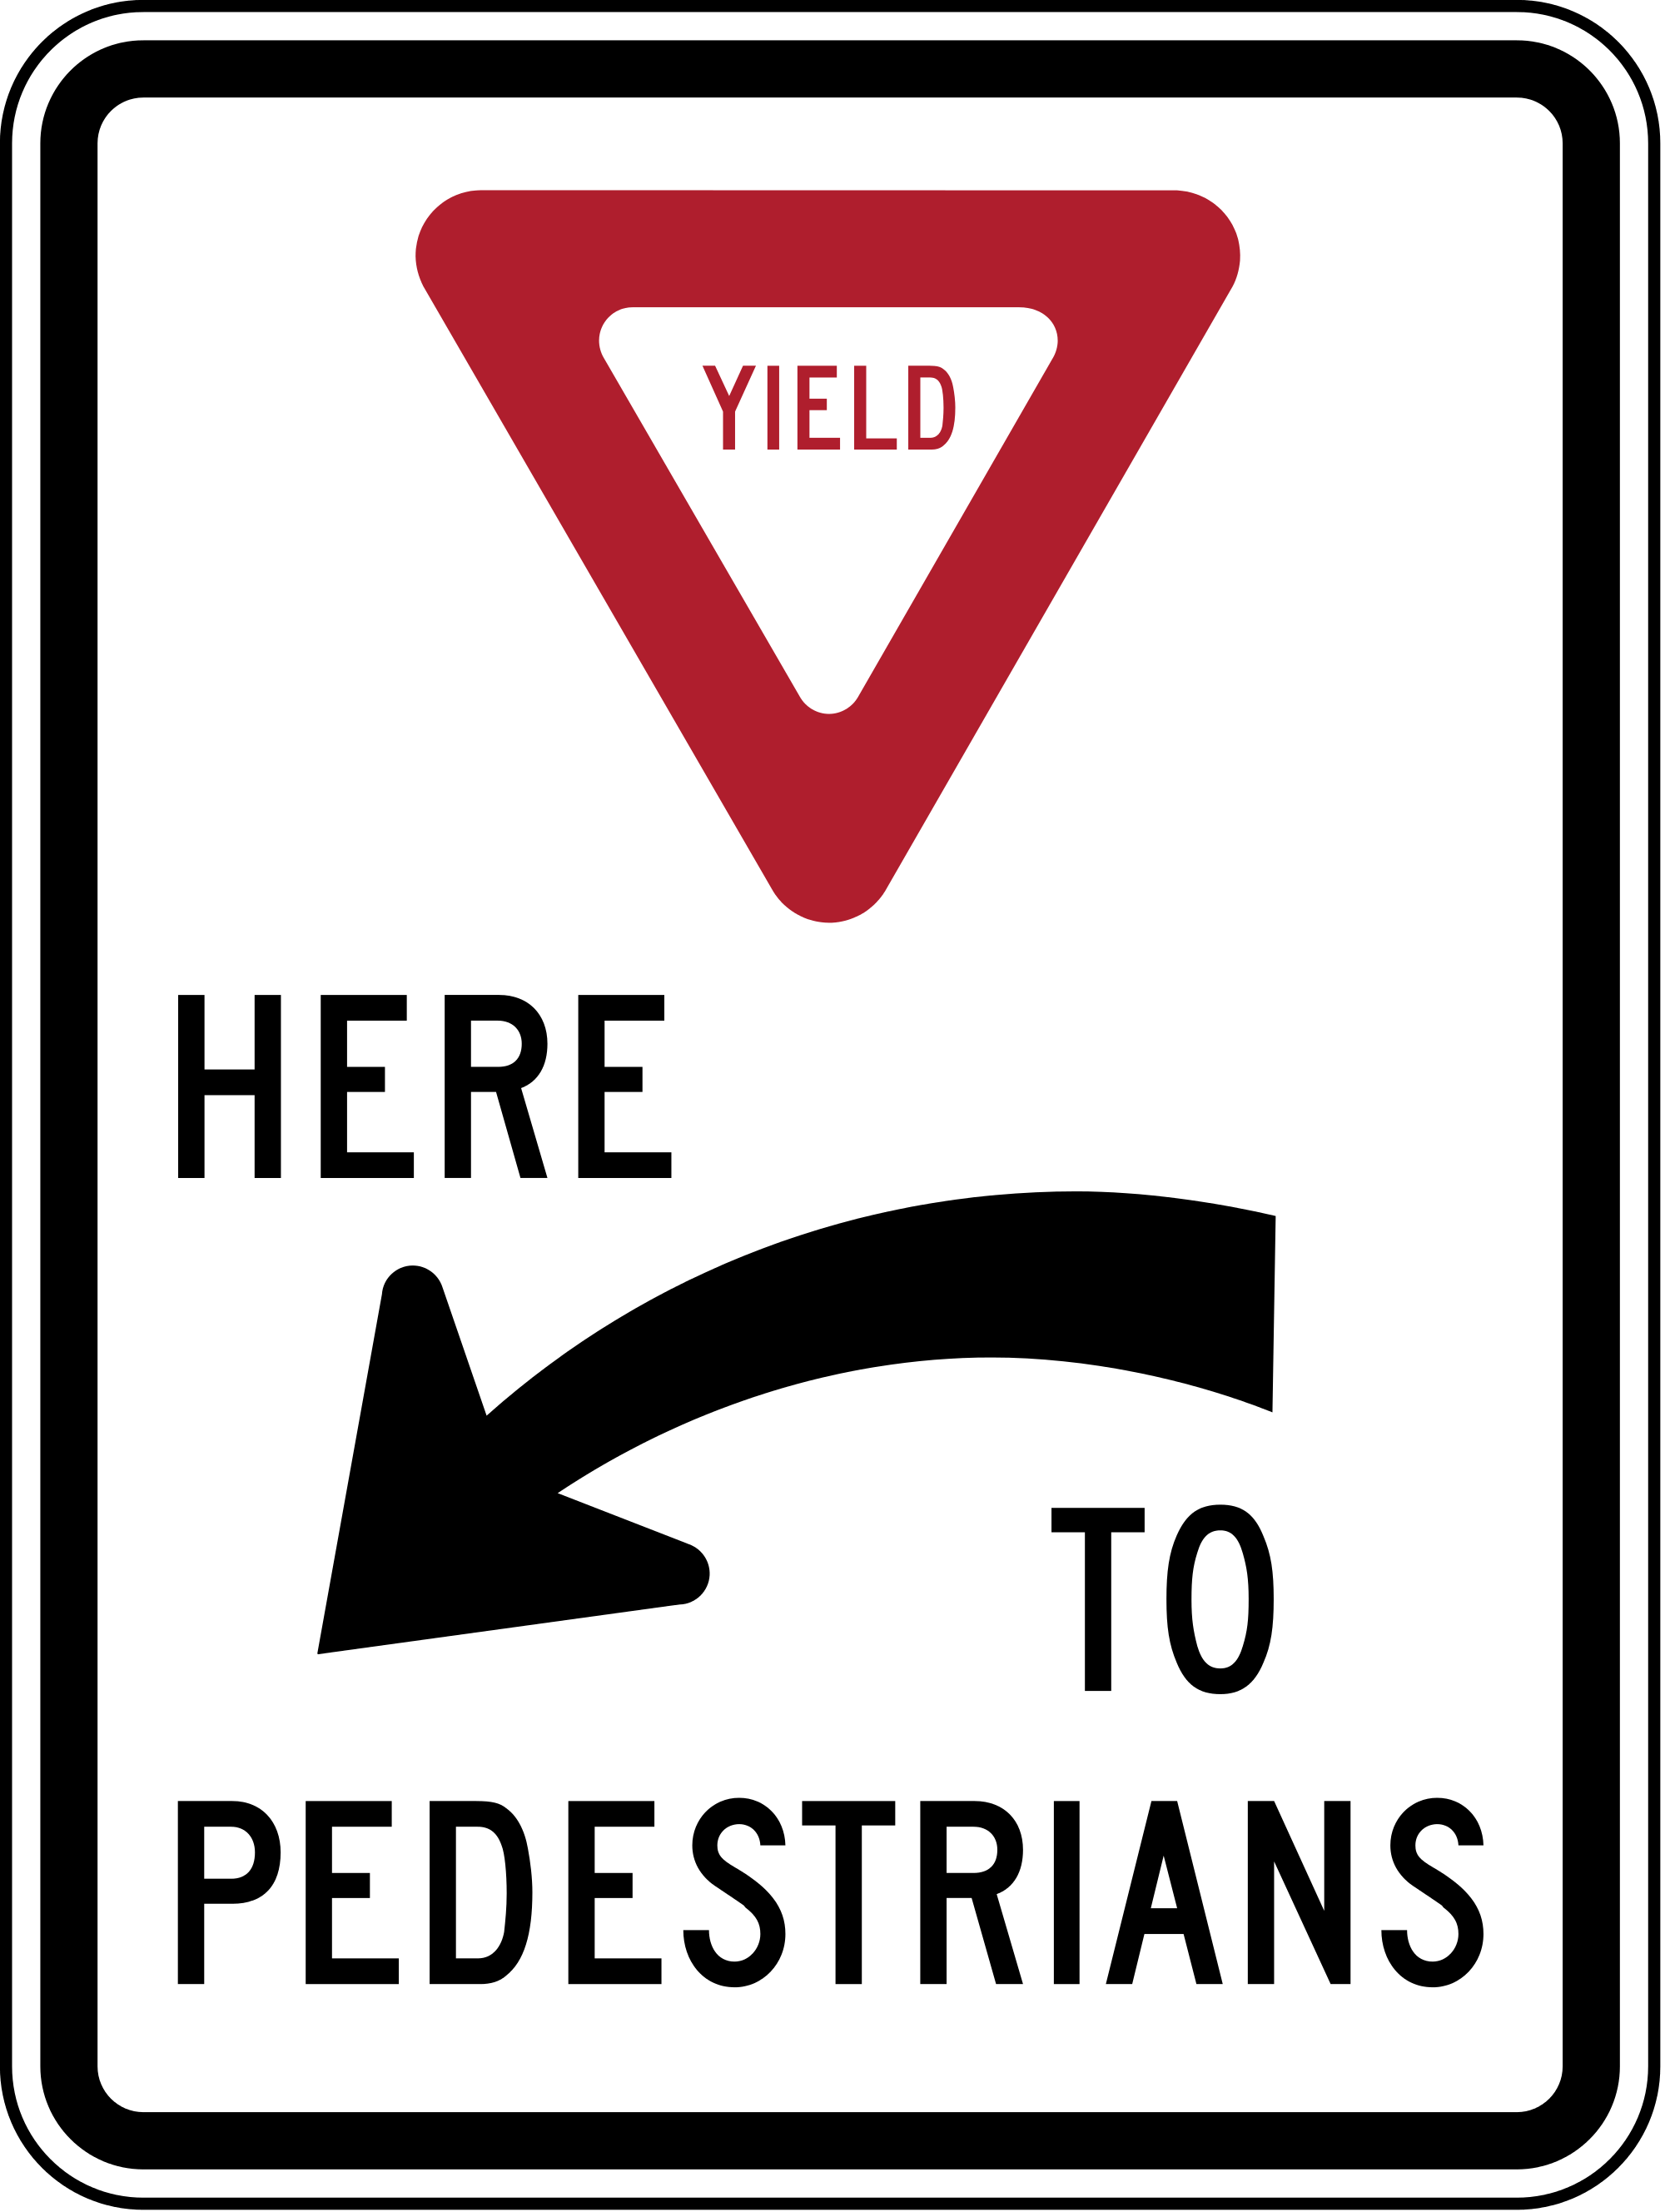 R1-5aL Yield Here To Pedestrians Regulatory Sign